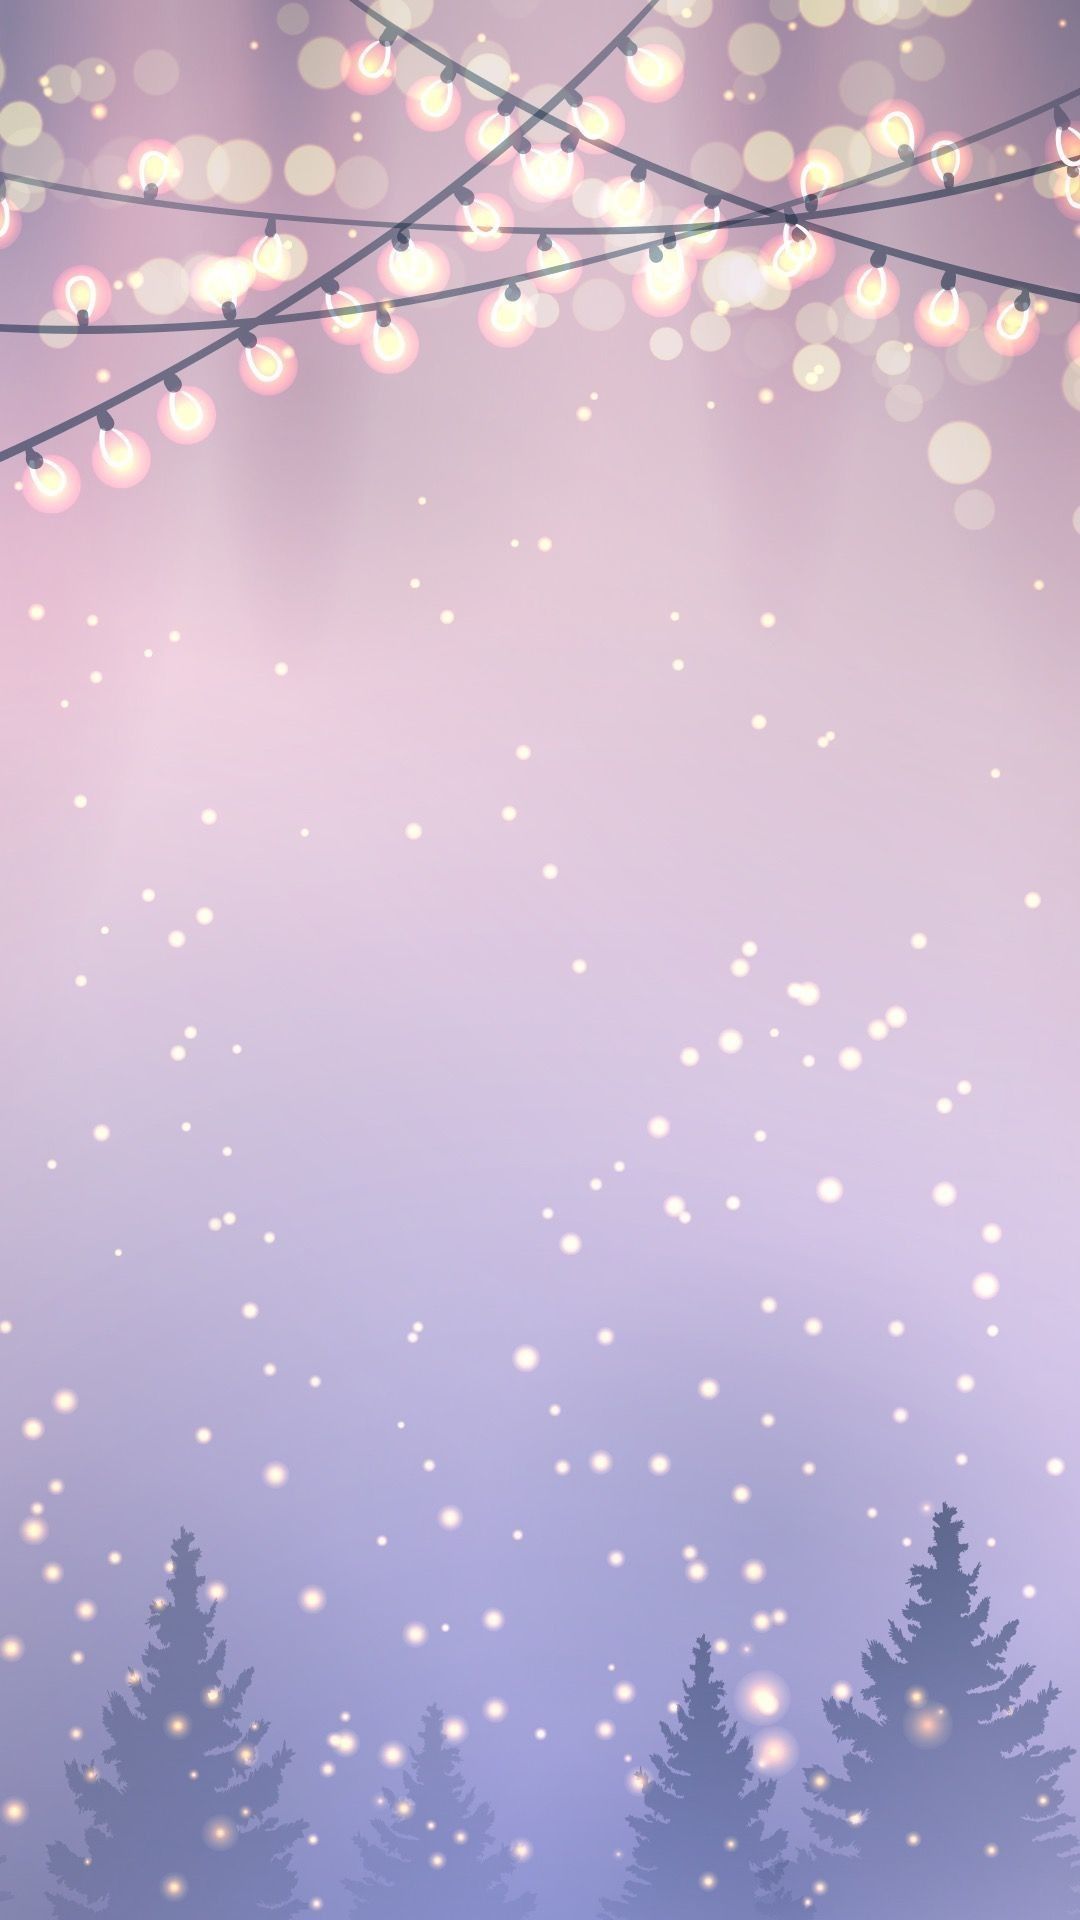 Cute Christmas Phone. Winter wallpaper, Pretty wallpaper, iPhone wallpaper lights